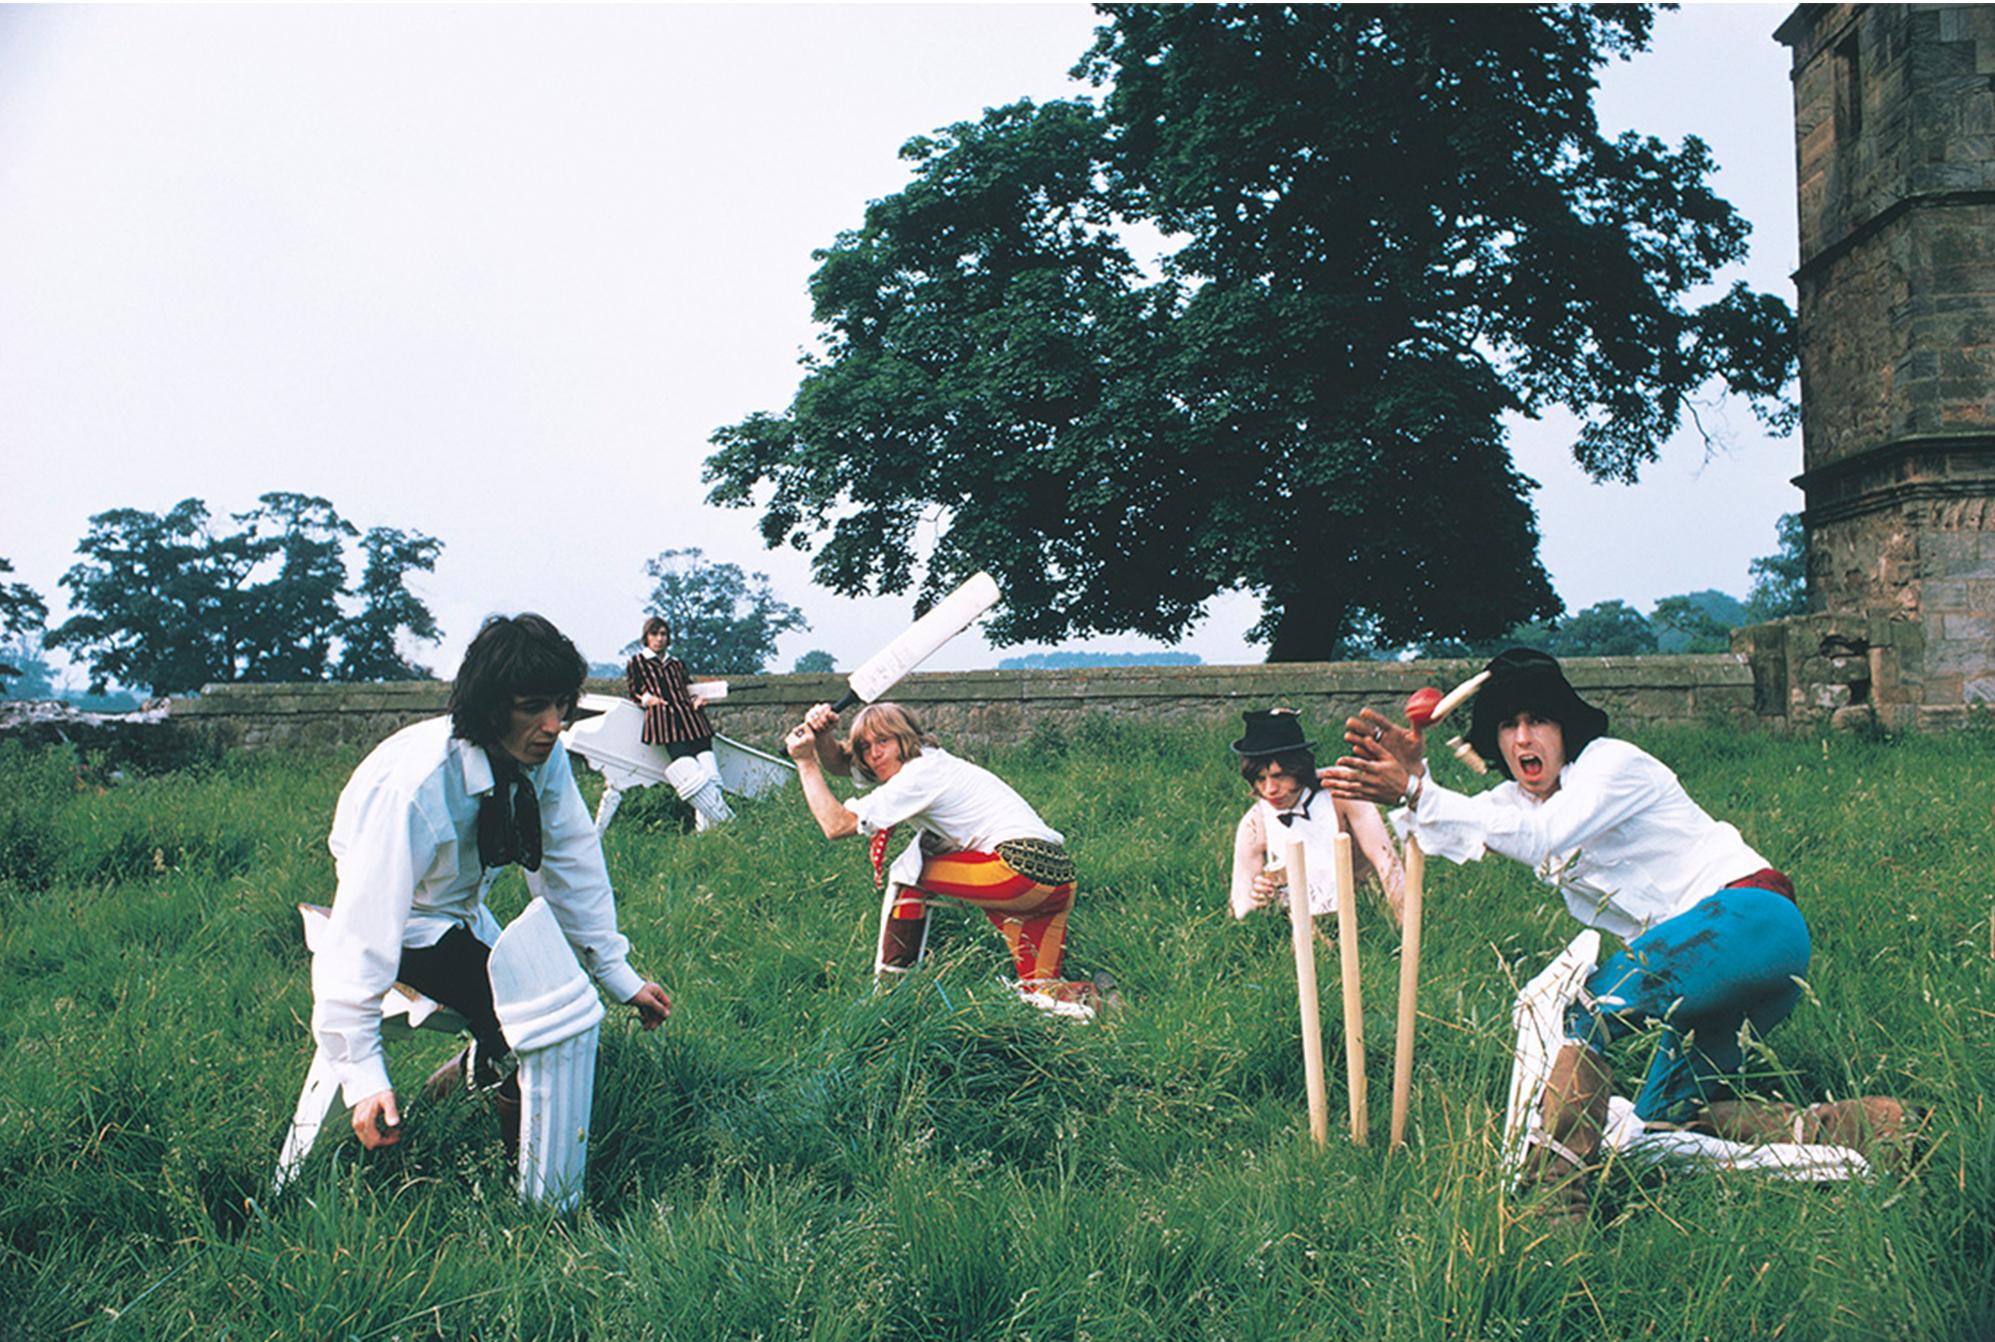 Michael Joseph Color Photograph – The Rolling Stones ""Zwei Cricketspieler beim Cricketspiel" London 1968